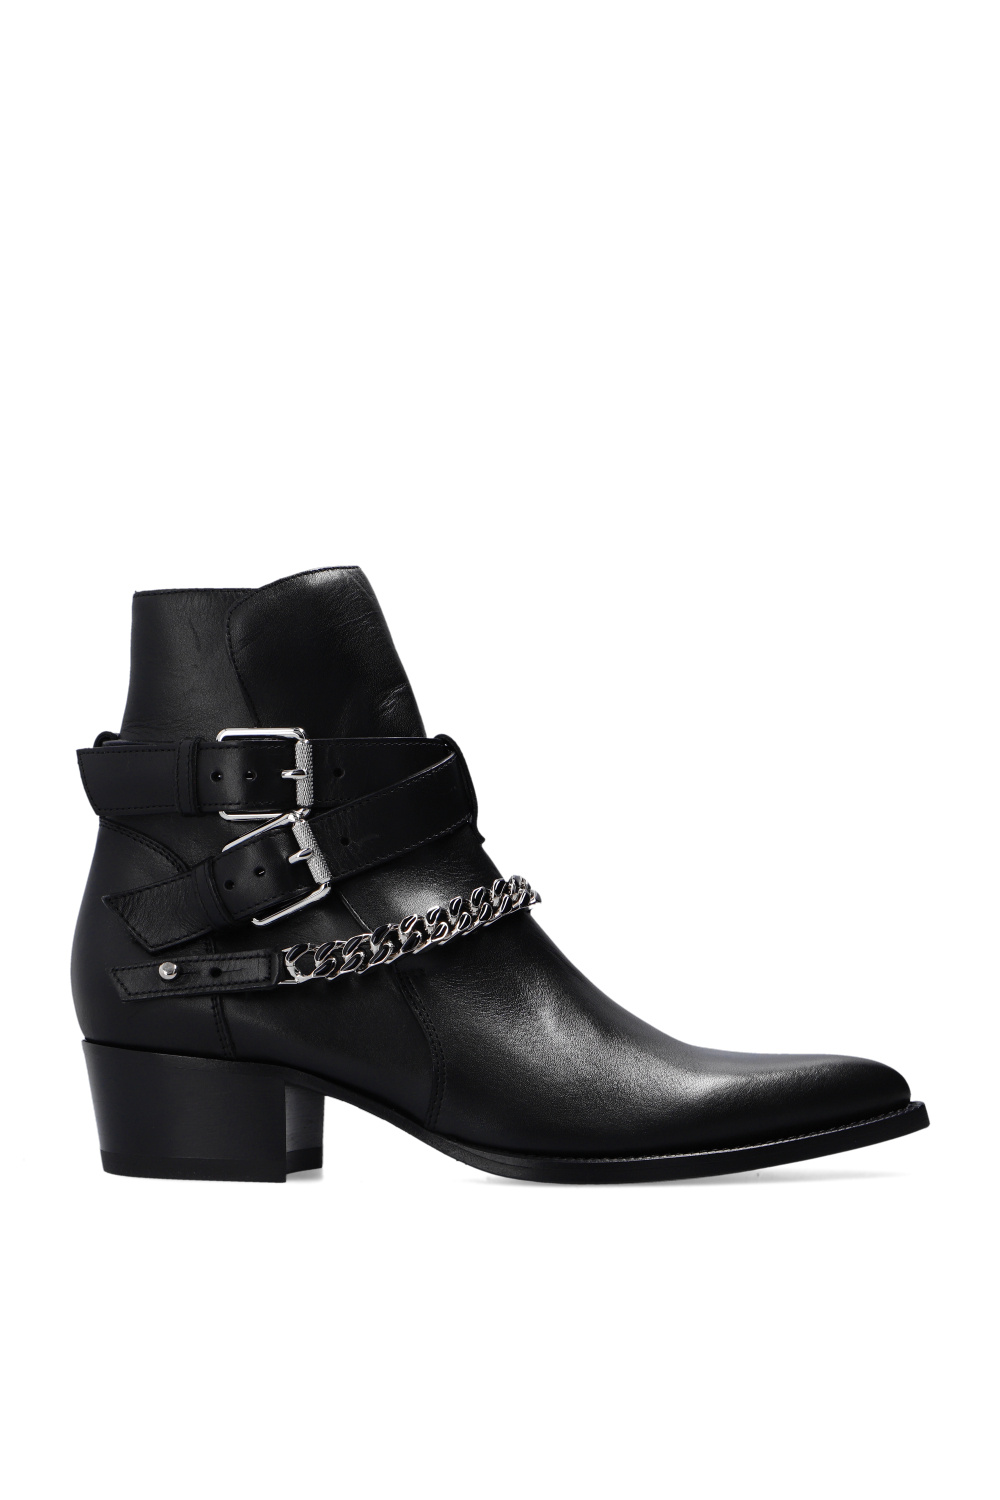 Silhouette glitter ankle boots Louis Vuitton Black size 39.5 EU in